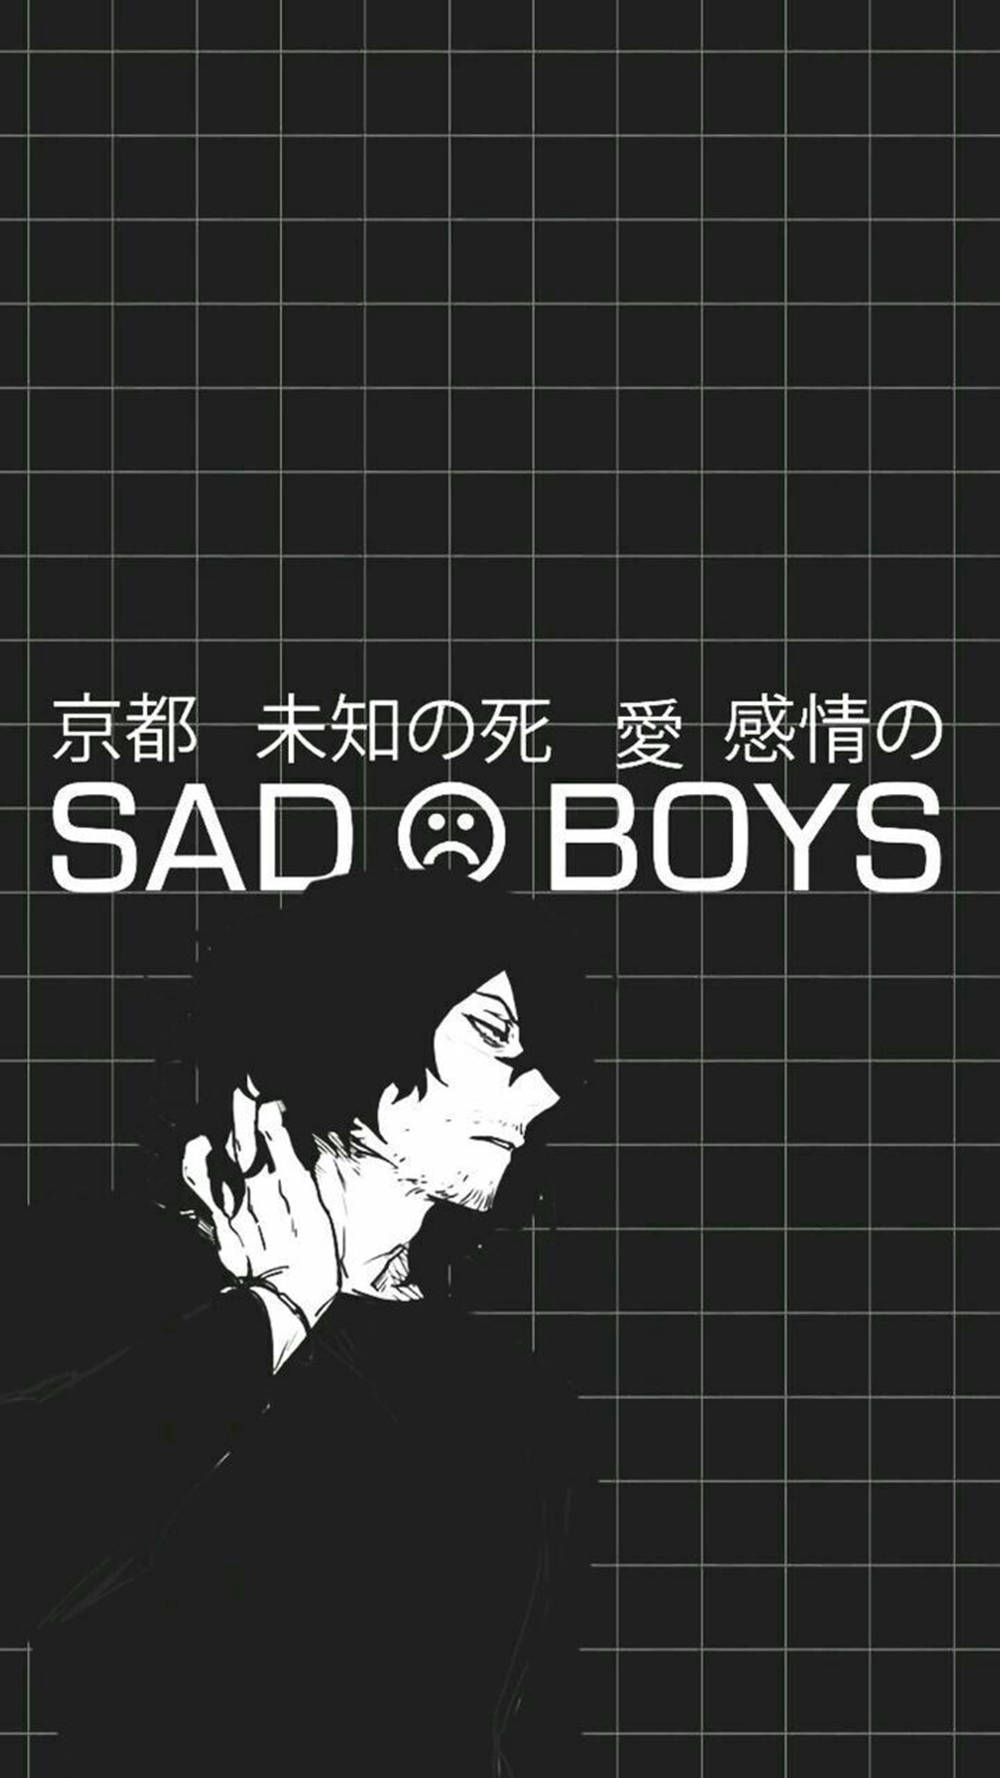 Boys With Sad Aesthetic Tumblr Dark